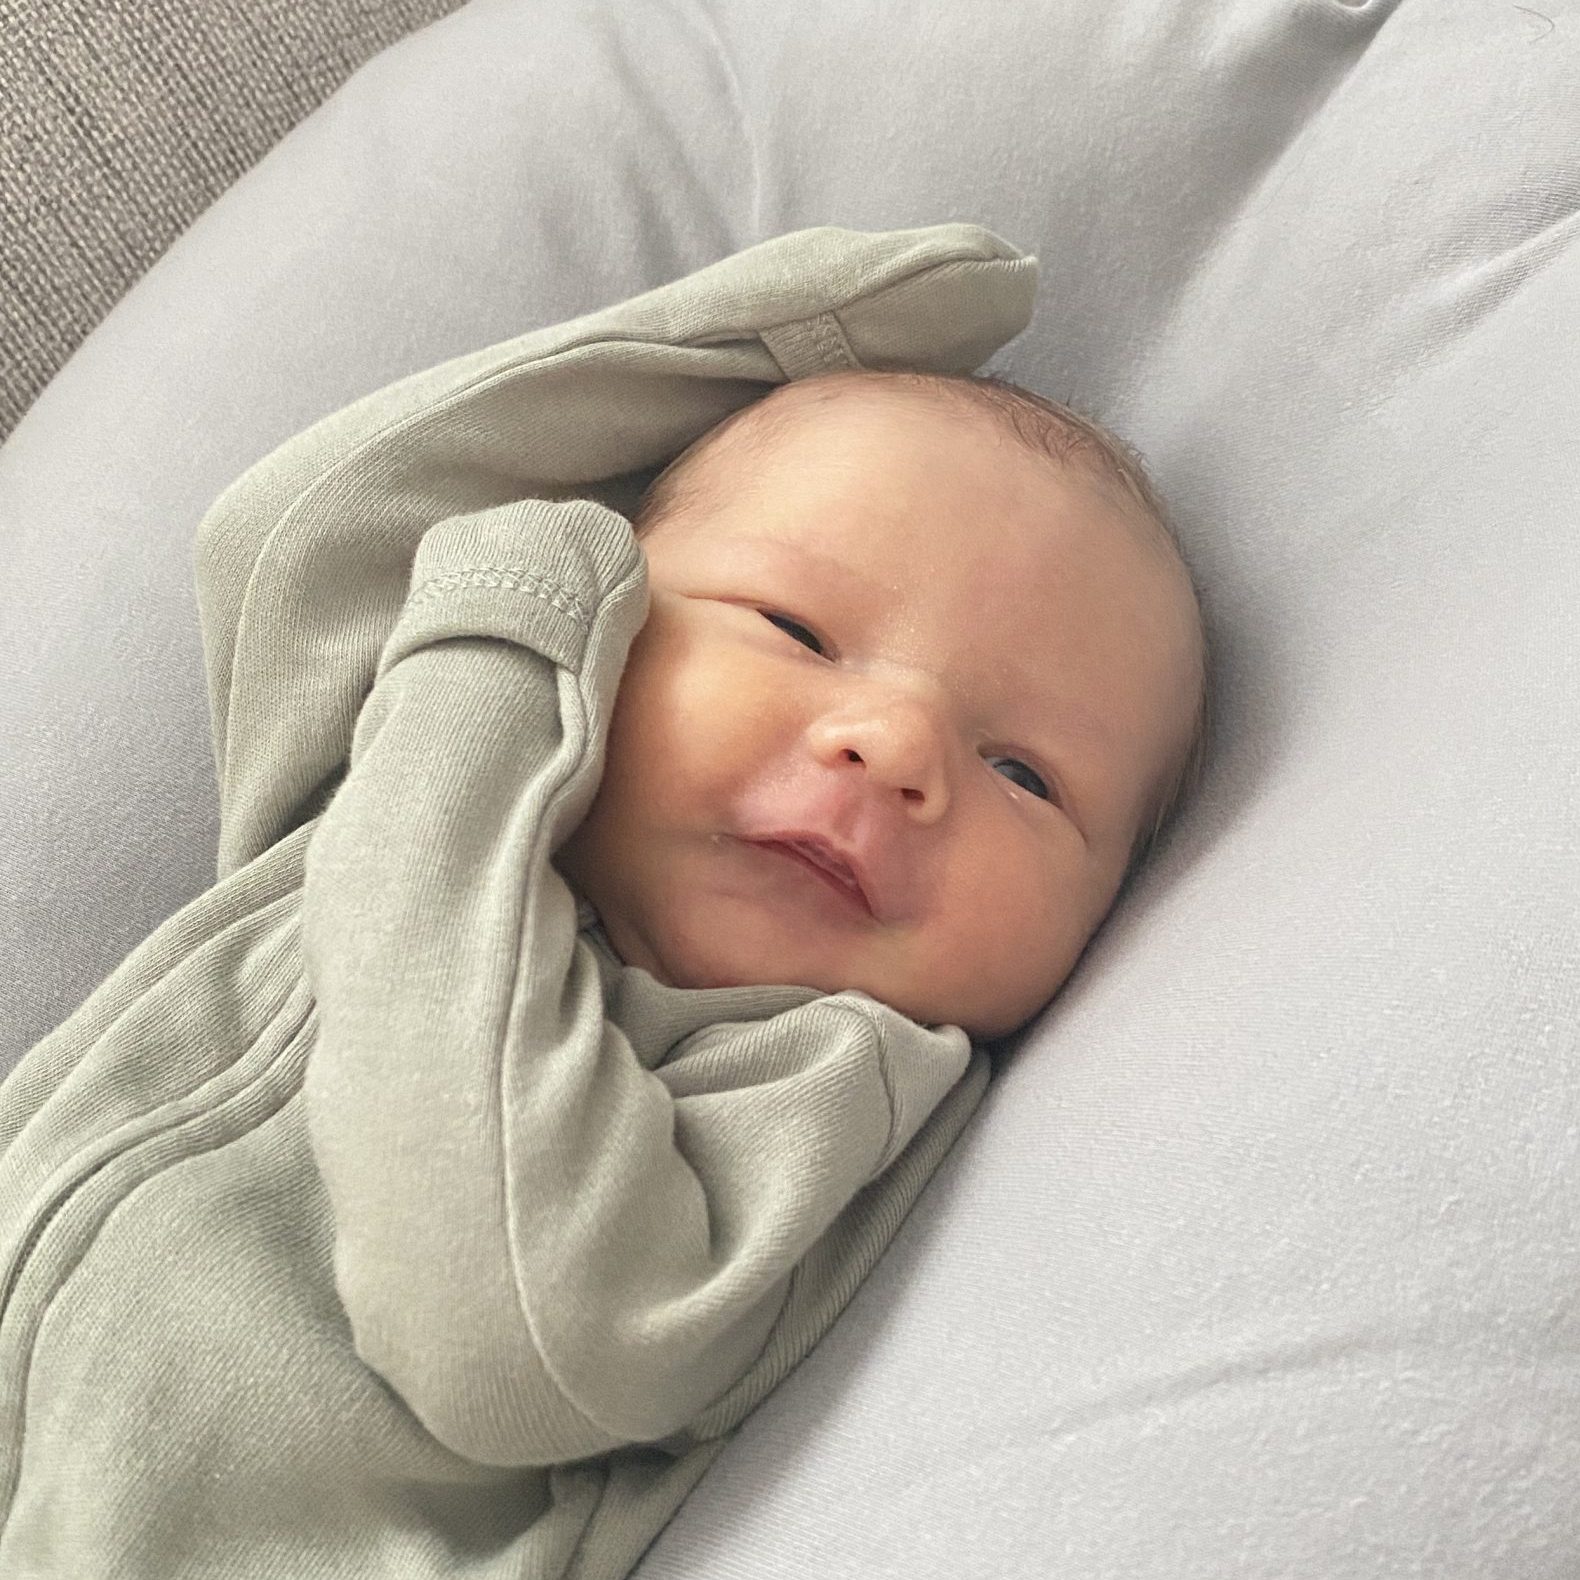 Newborn Jude wearing a gray sleeper